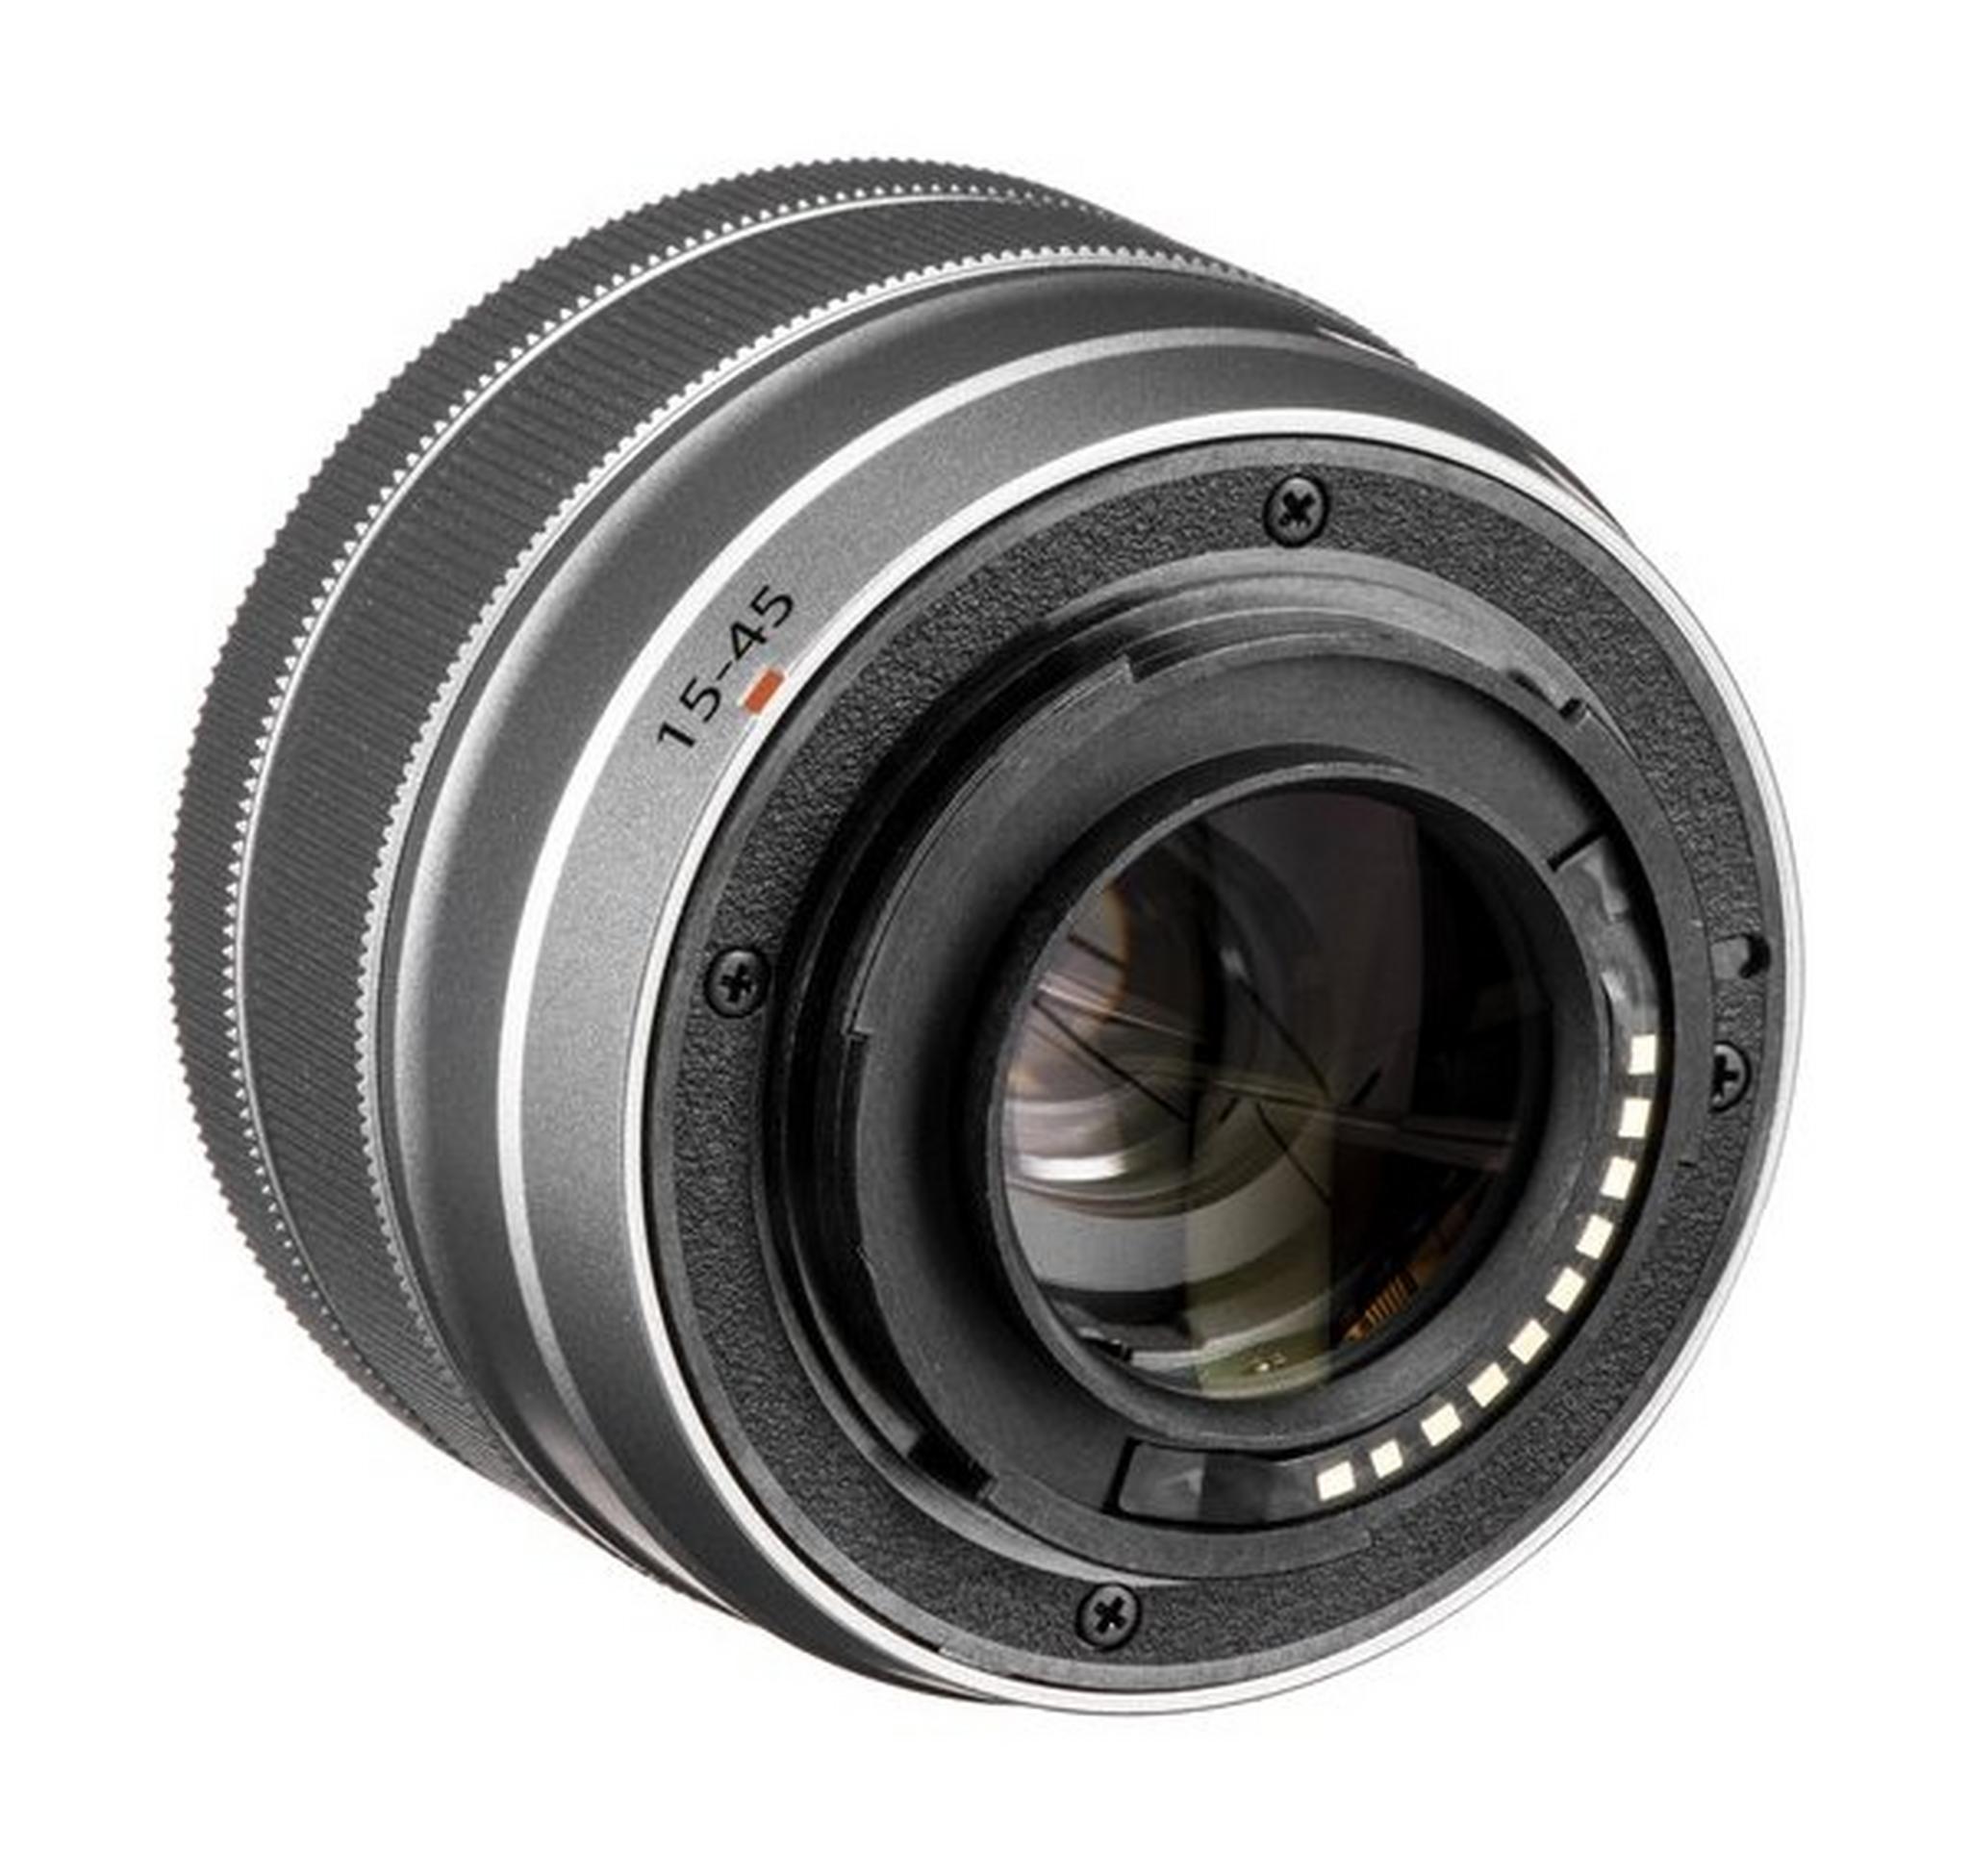 Fujifilm X-A7 Mirrorless Digital Camera with 15-45mm Lens - Caramel